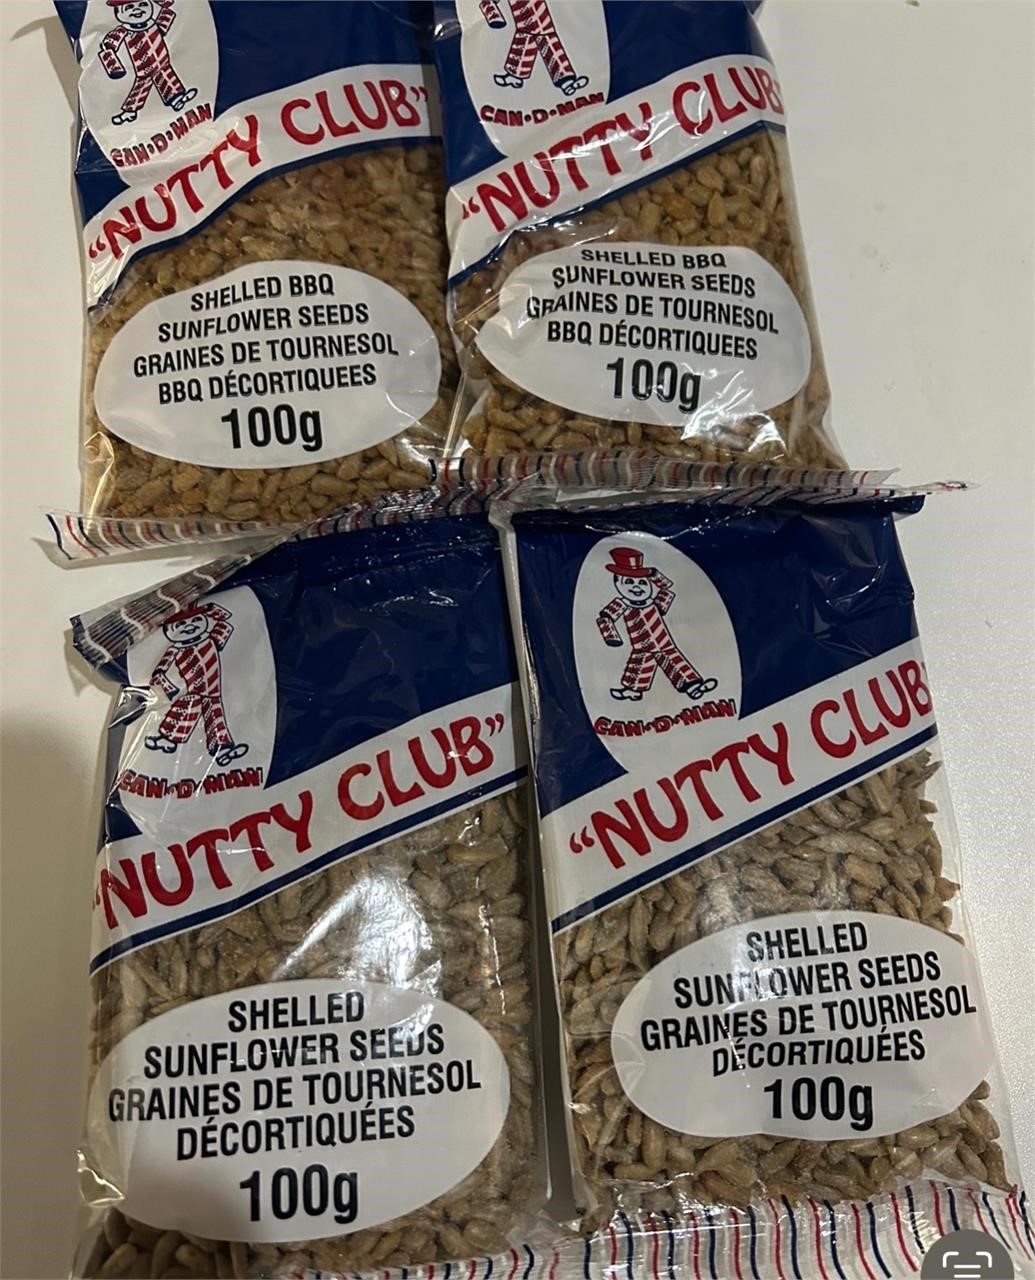 NEW (4x100g) Nutty Club Shelled Sunflower Seeds